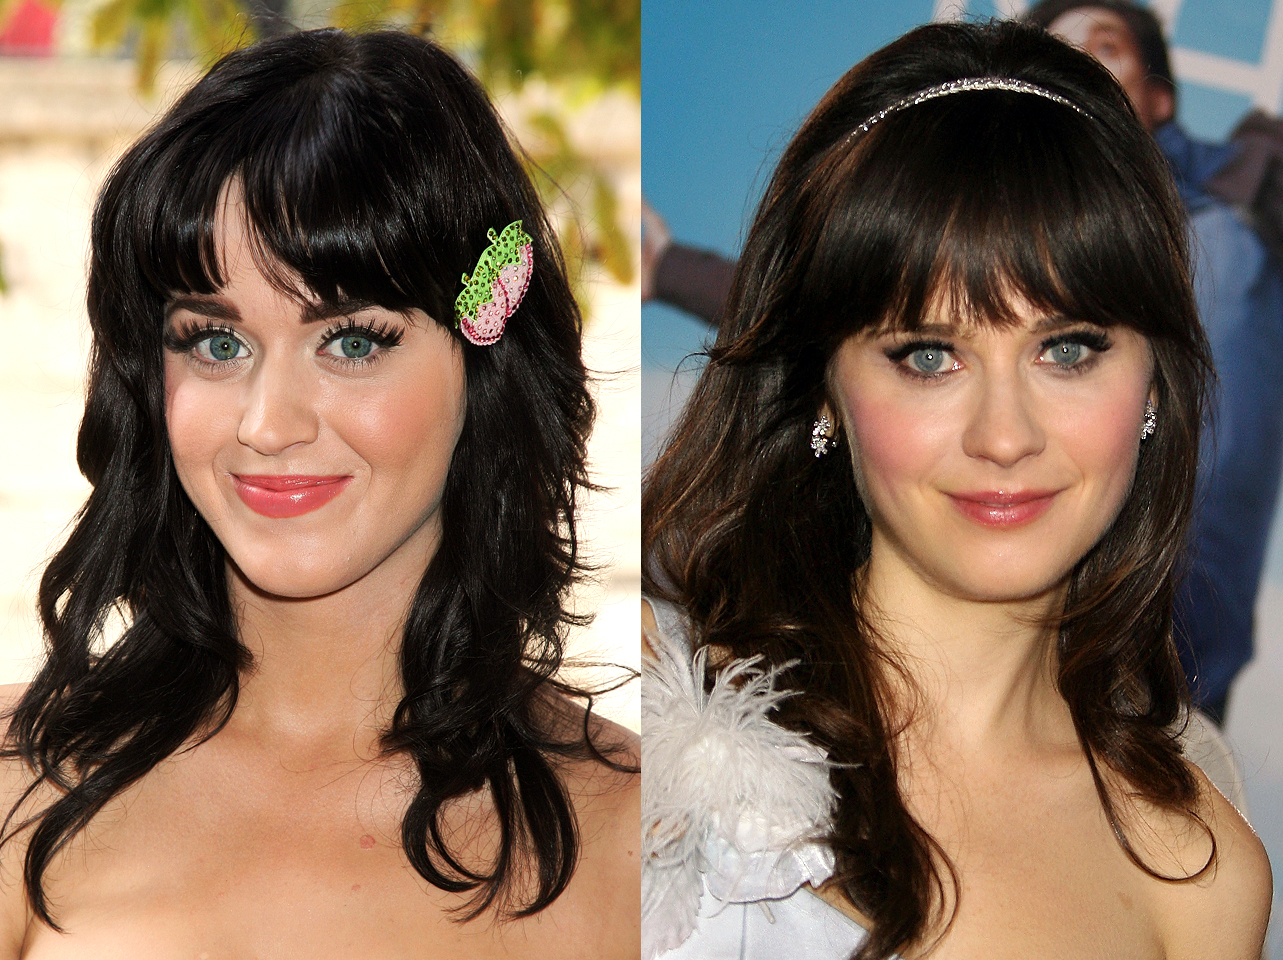 Katy Perry en France en 2008 | Zooey Deschanel à Los Angeles en 2008 | Source : Getty Images